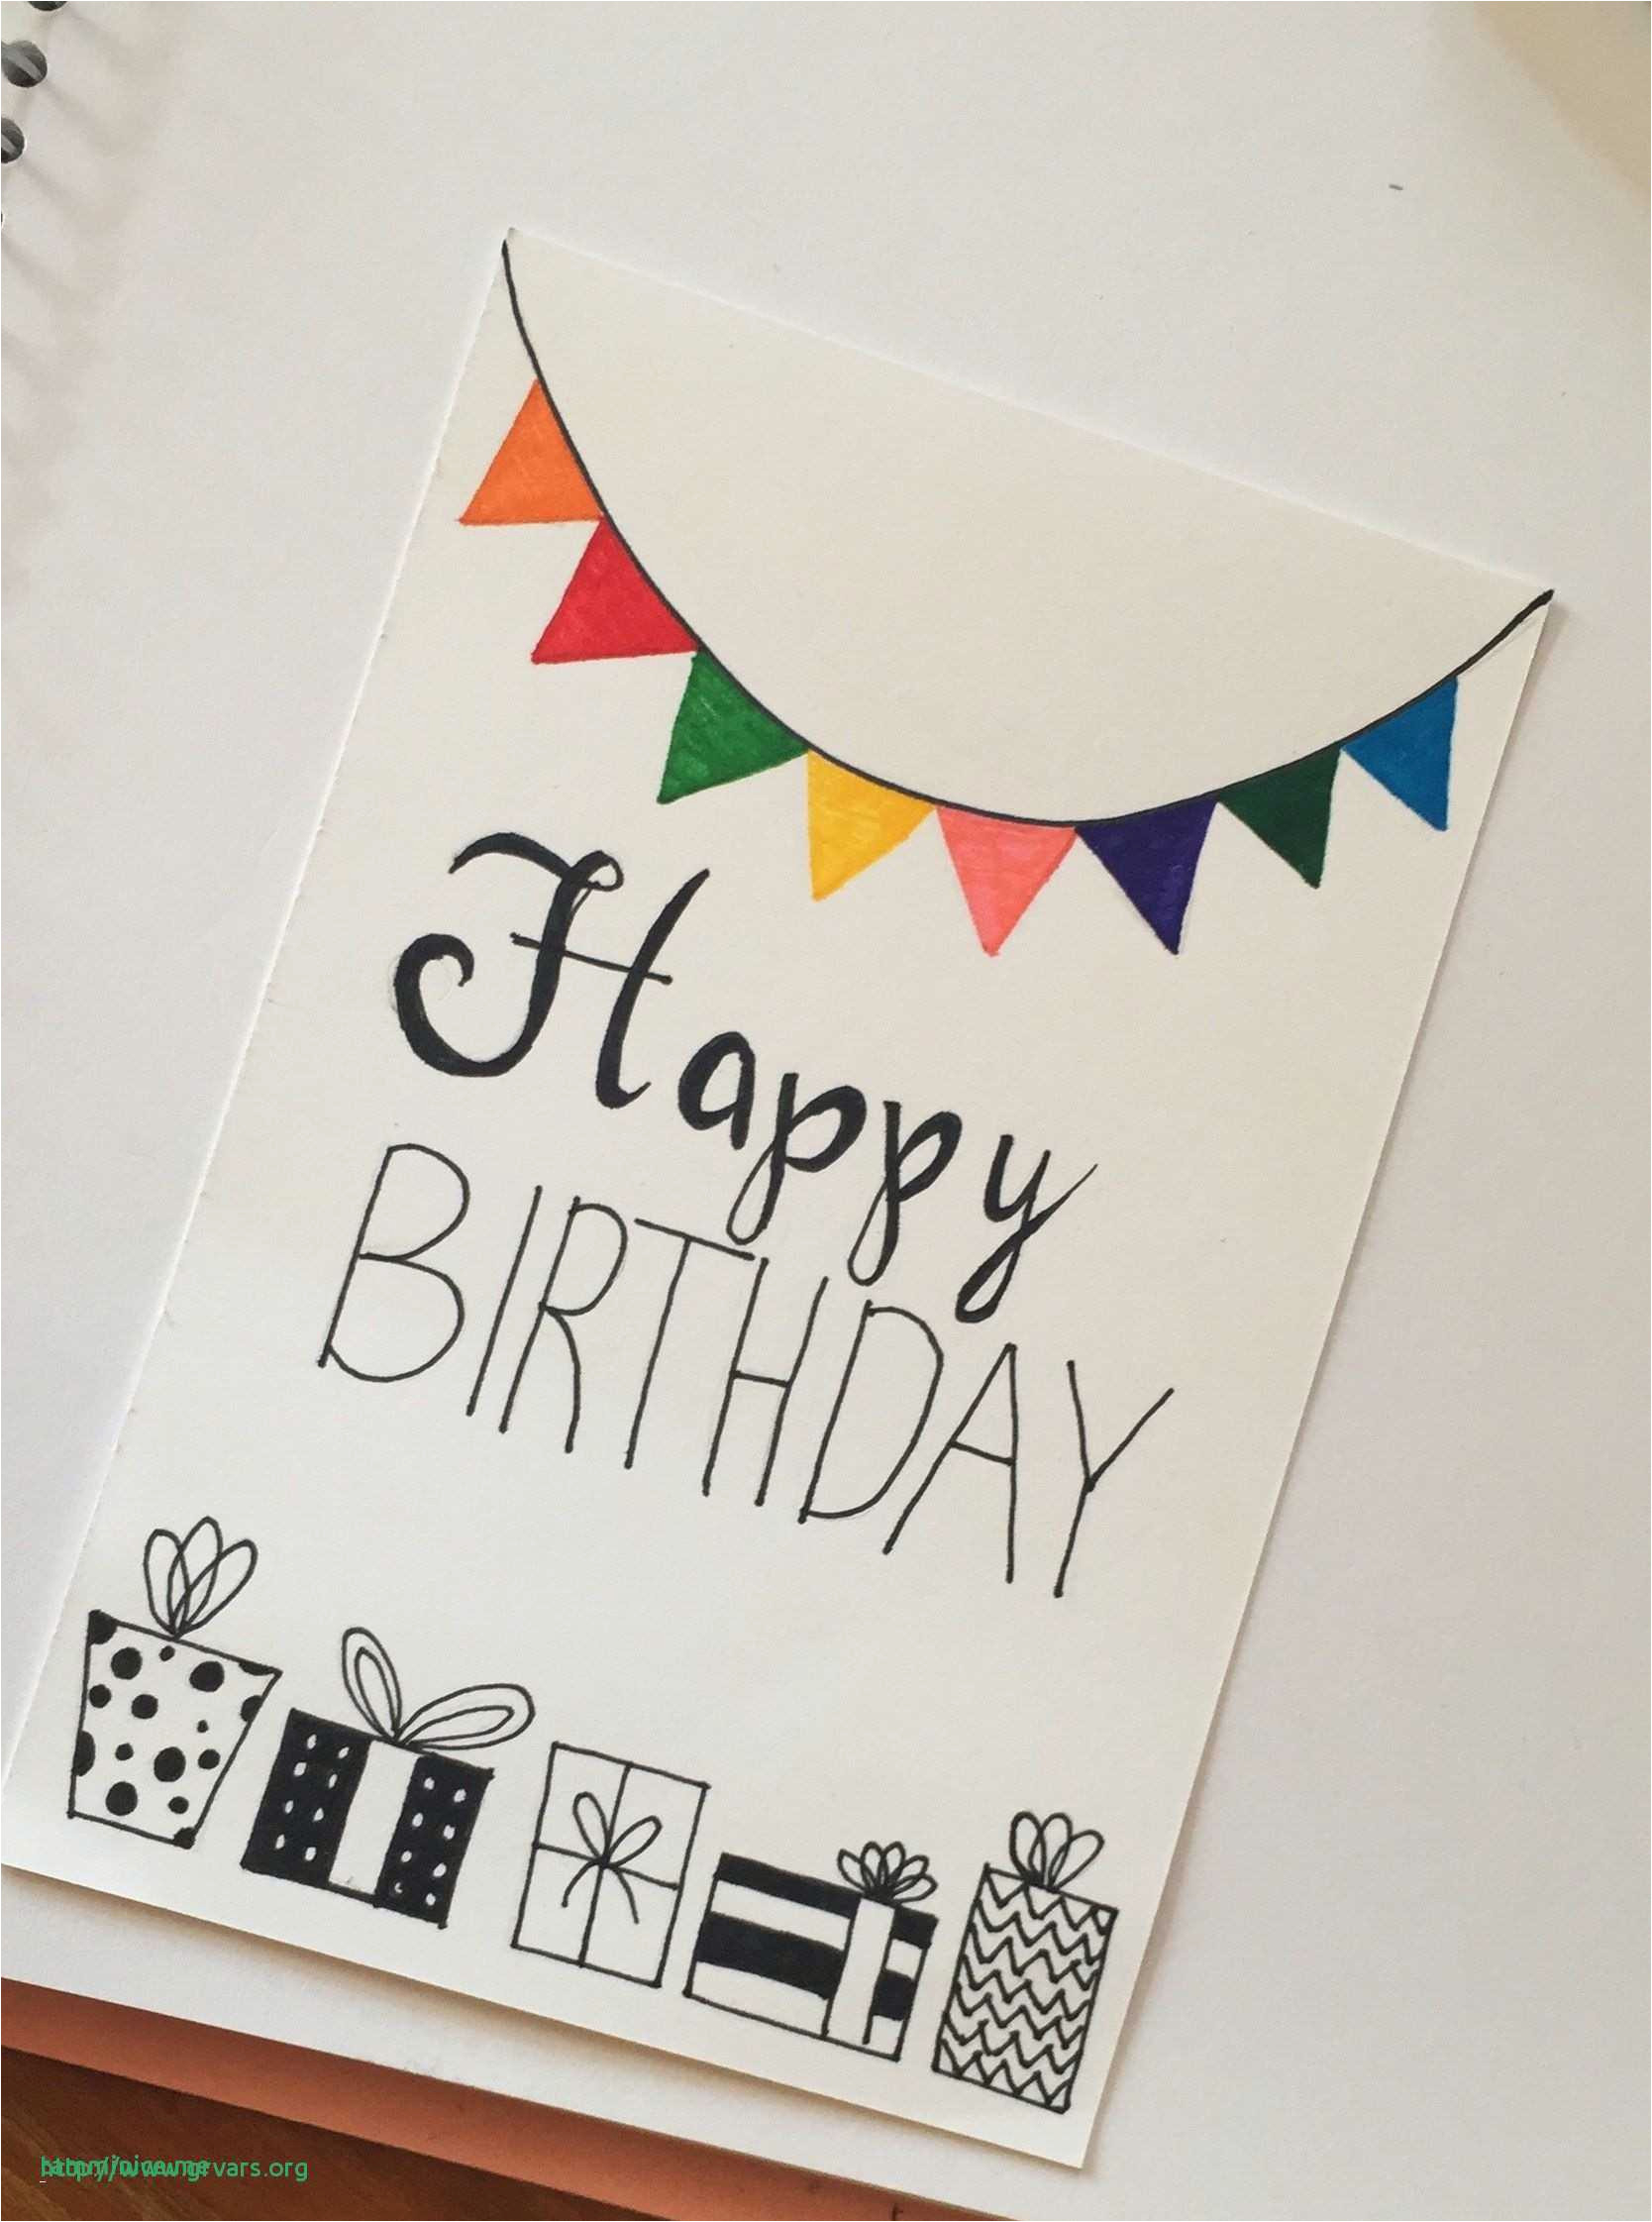 Easy Handmade Birthday Card Ideas Diy Birthday Cards Simple Simple Handmade Birthday Cards Awesome